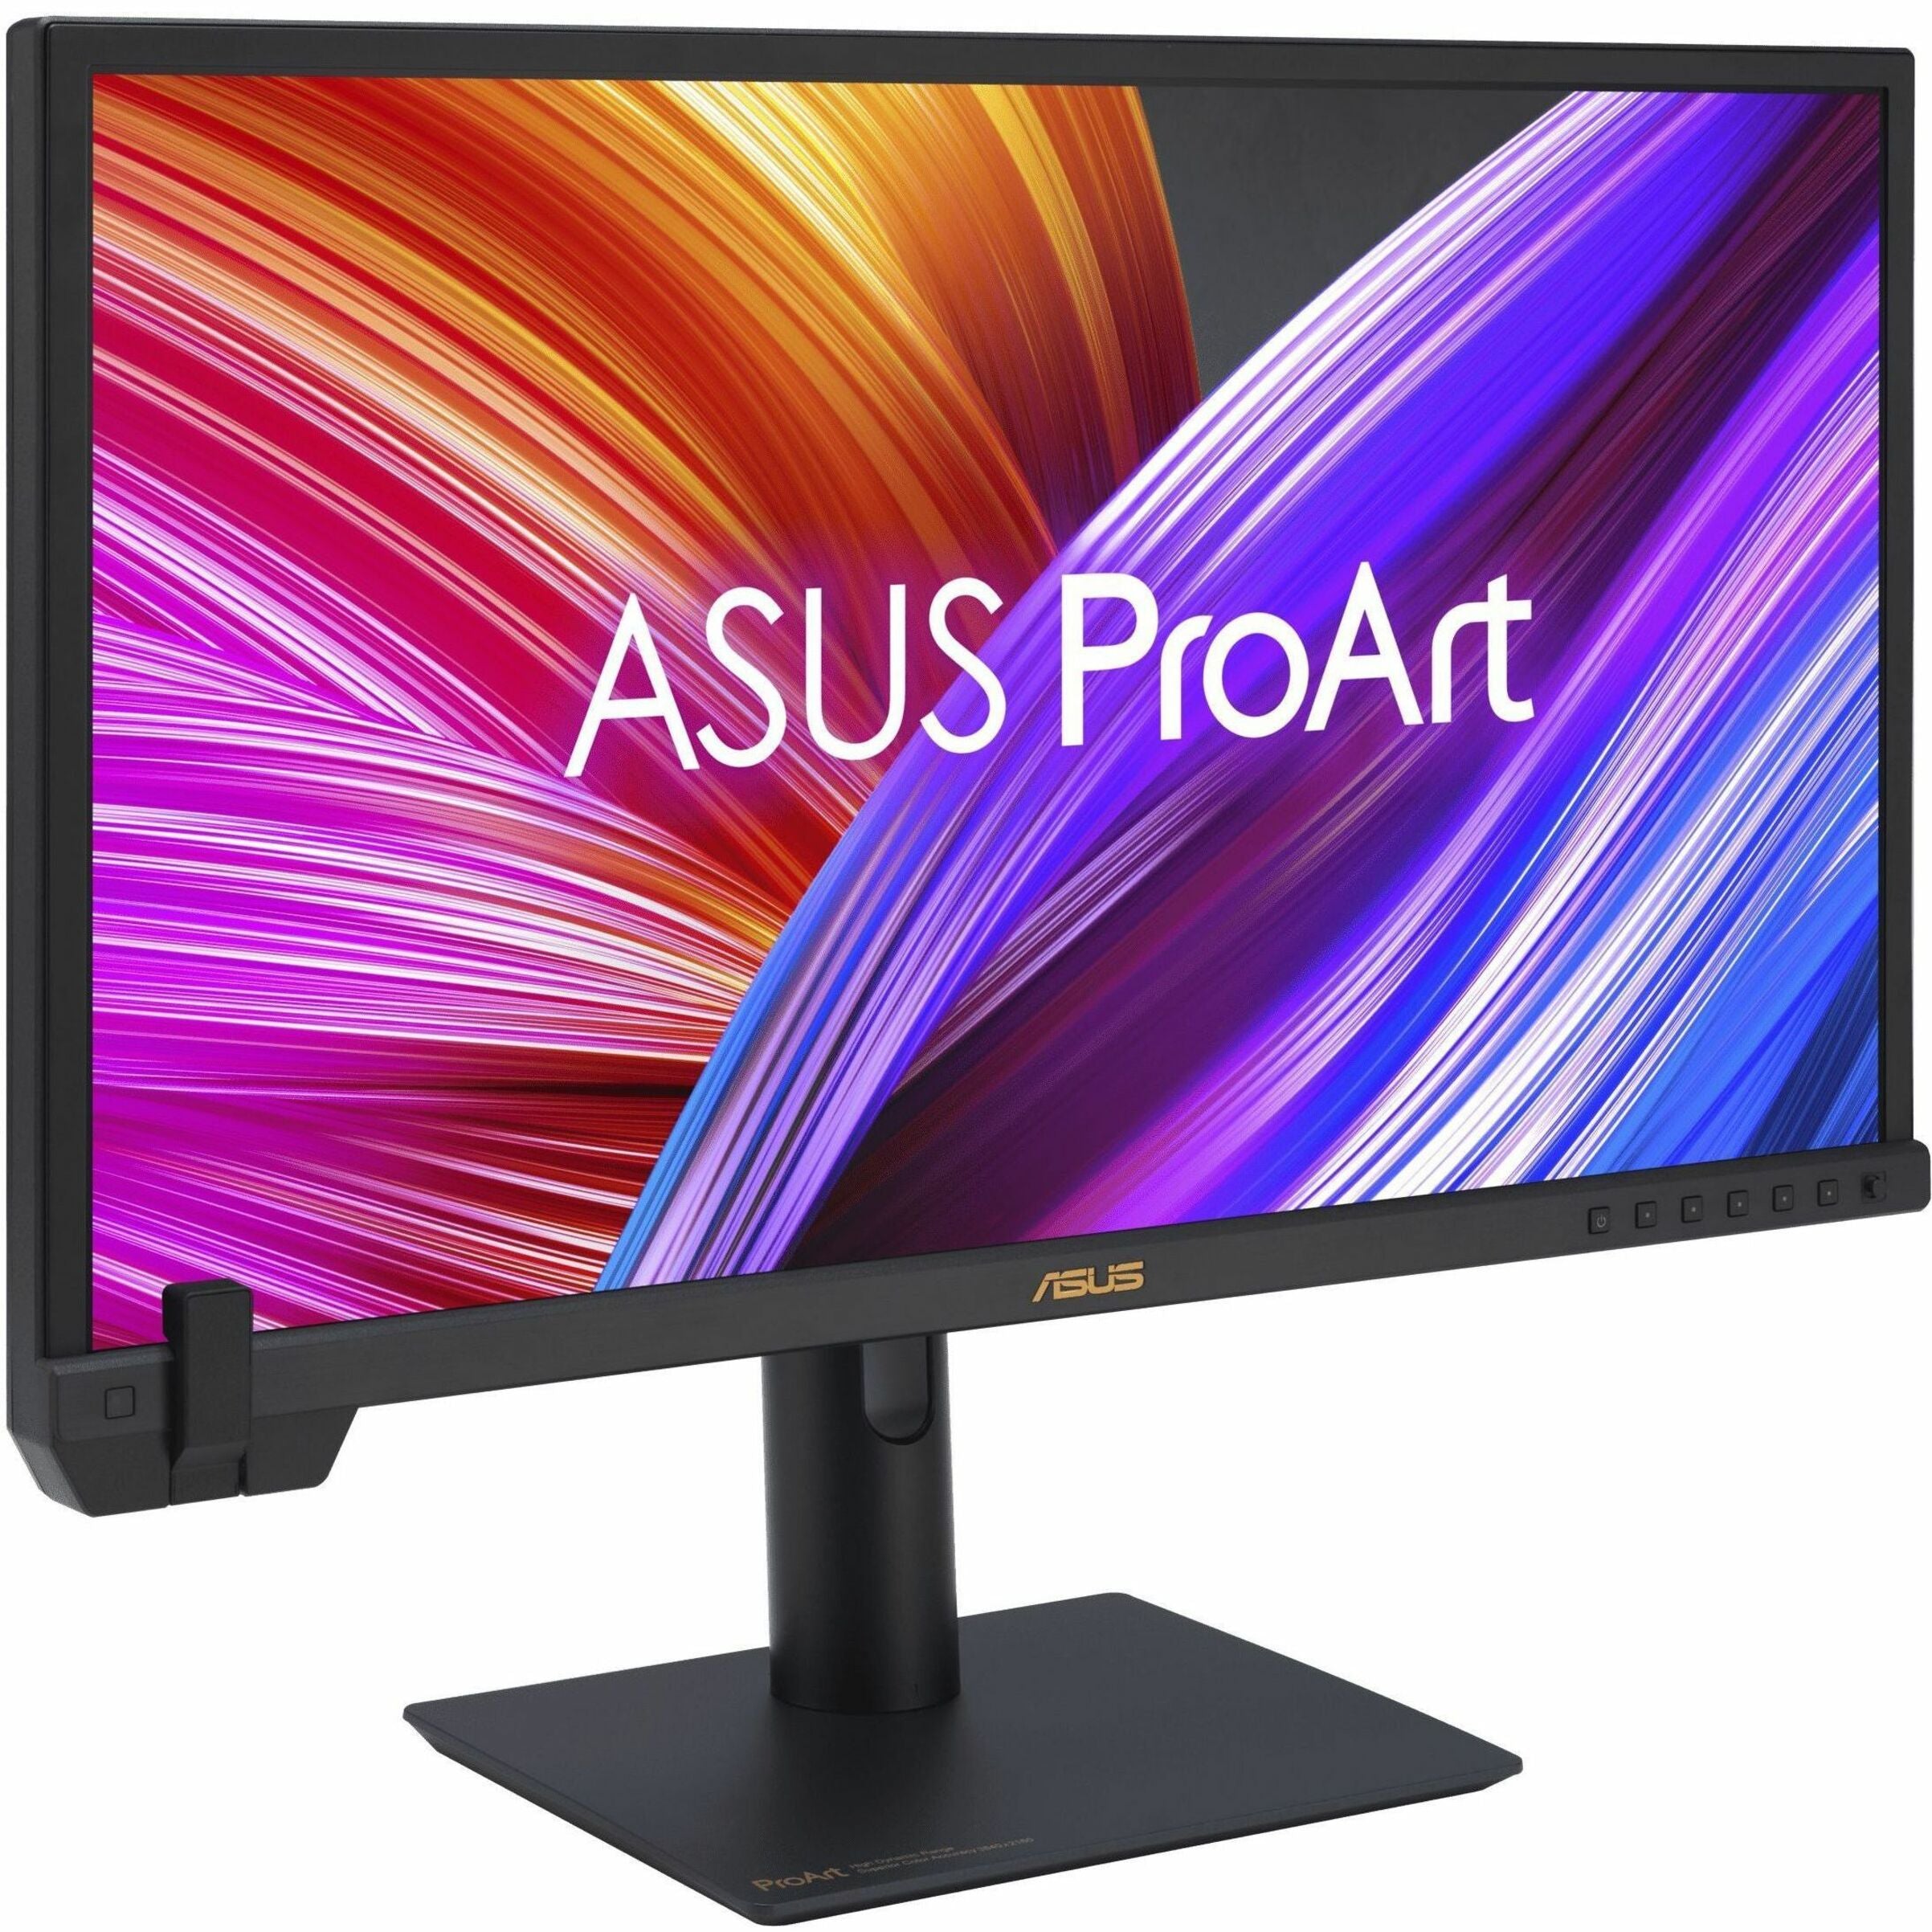 Asus PA24US ProArt Widescreen LED Monitor 24 4K UHD HDR USB-C 